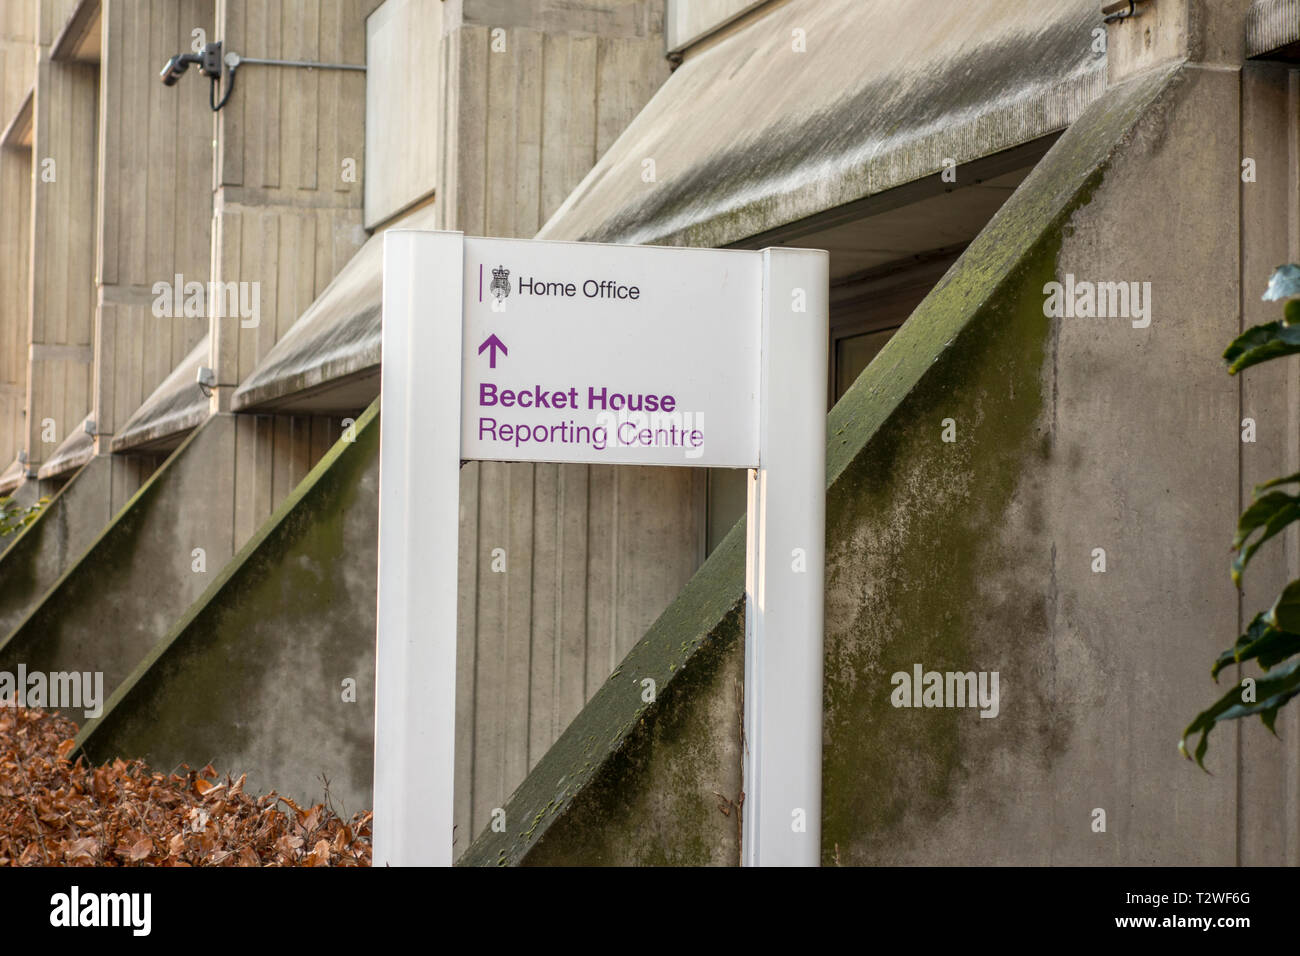 Zeichen außerhalb des Home Office Immigration Centre, Becket House Reporting Centre, St Thomas St, London, UK Stockfoto